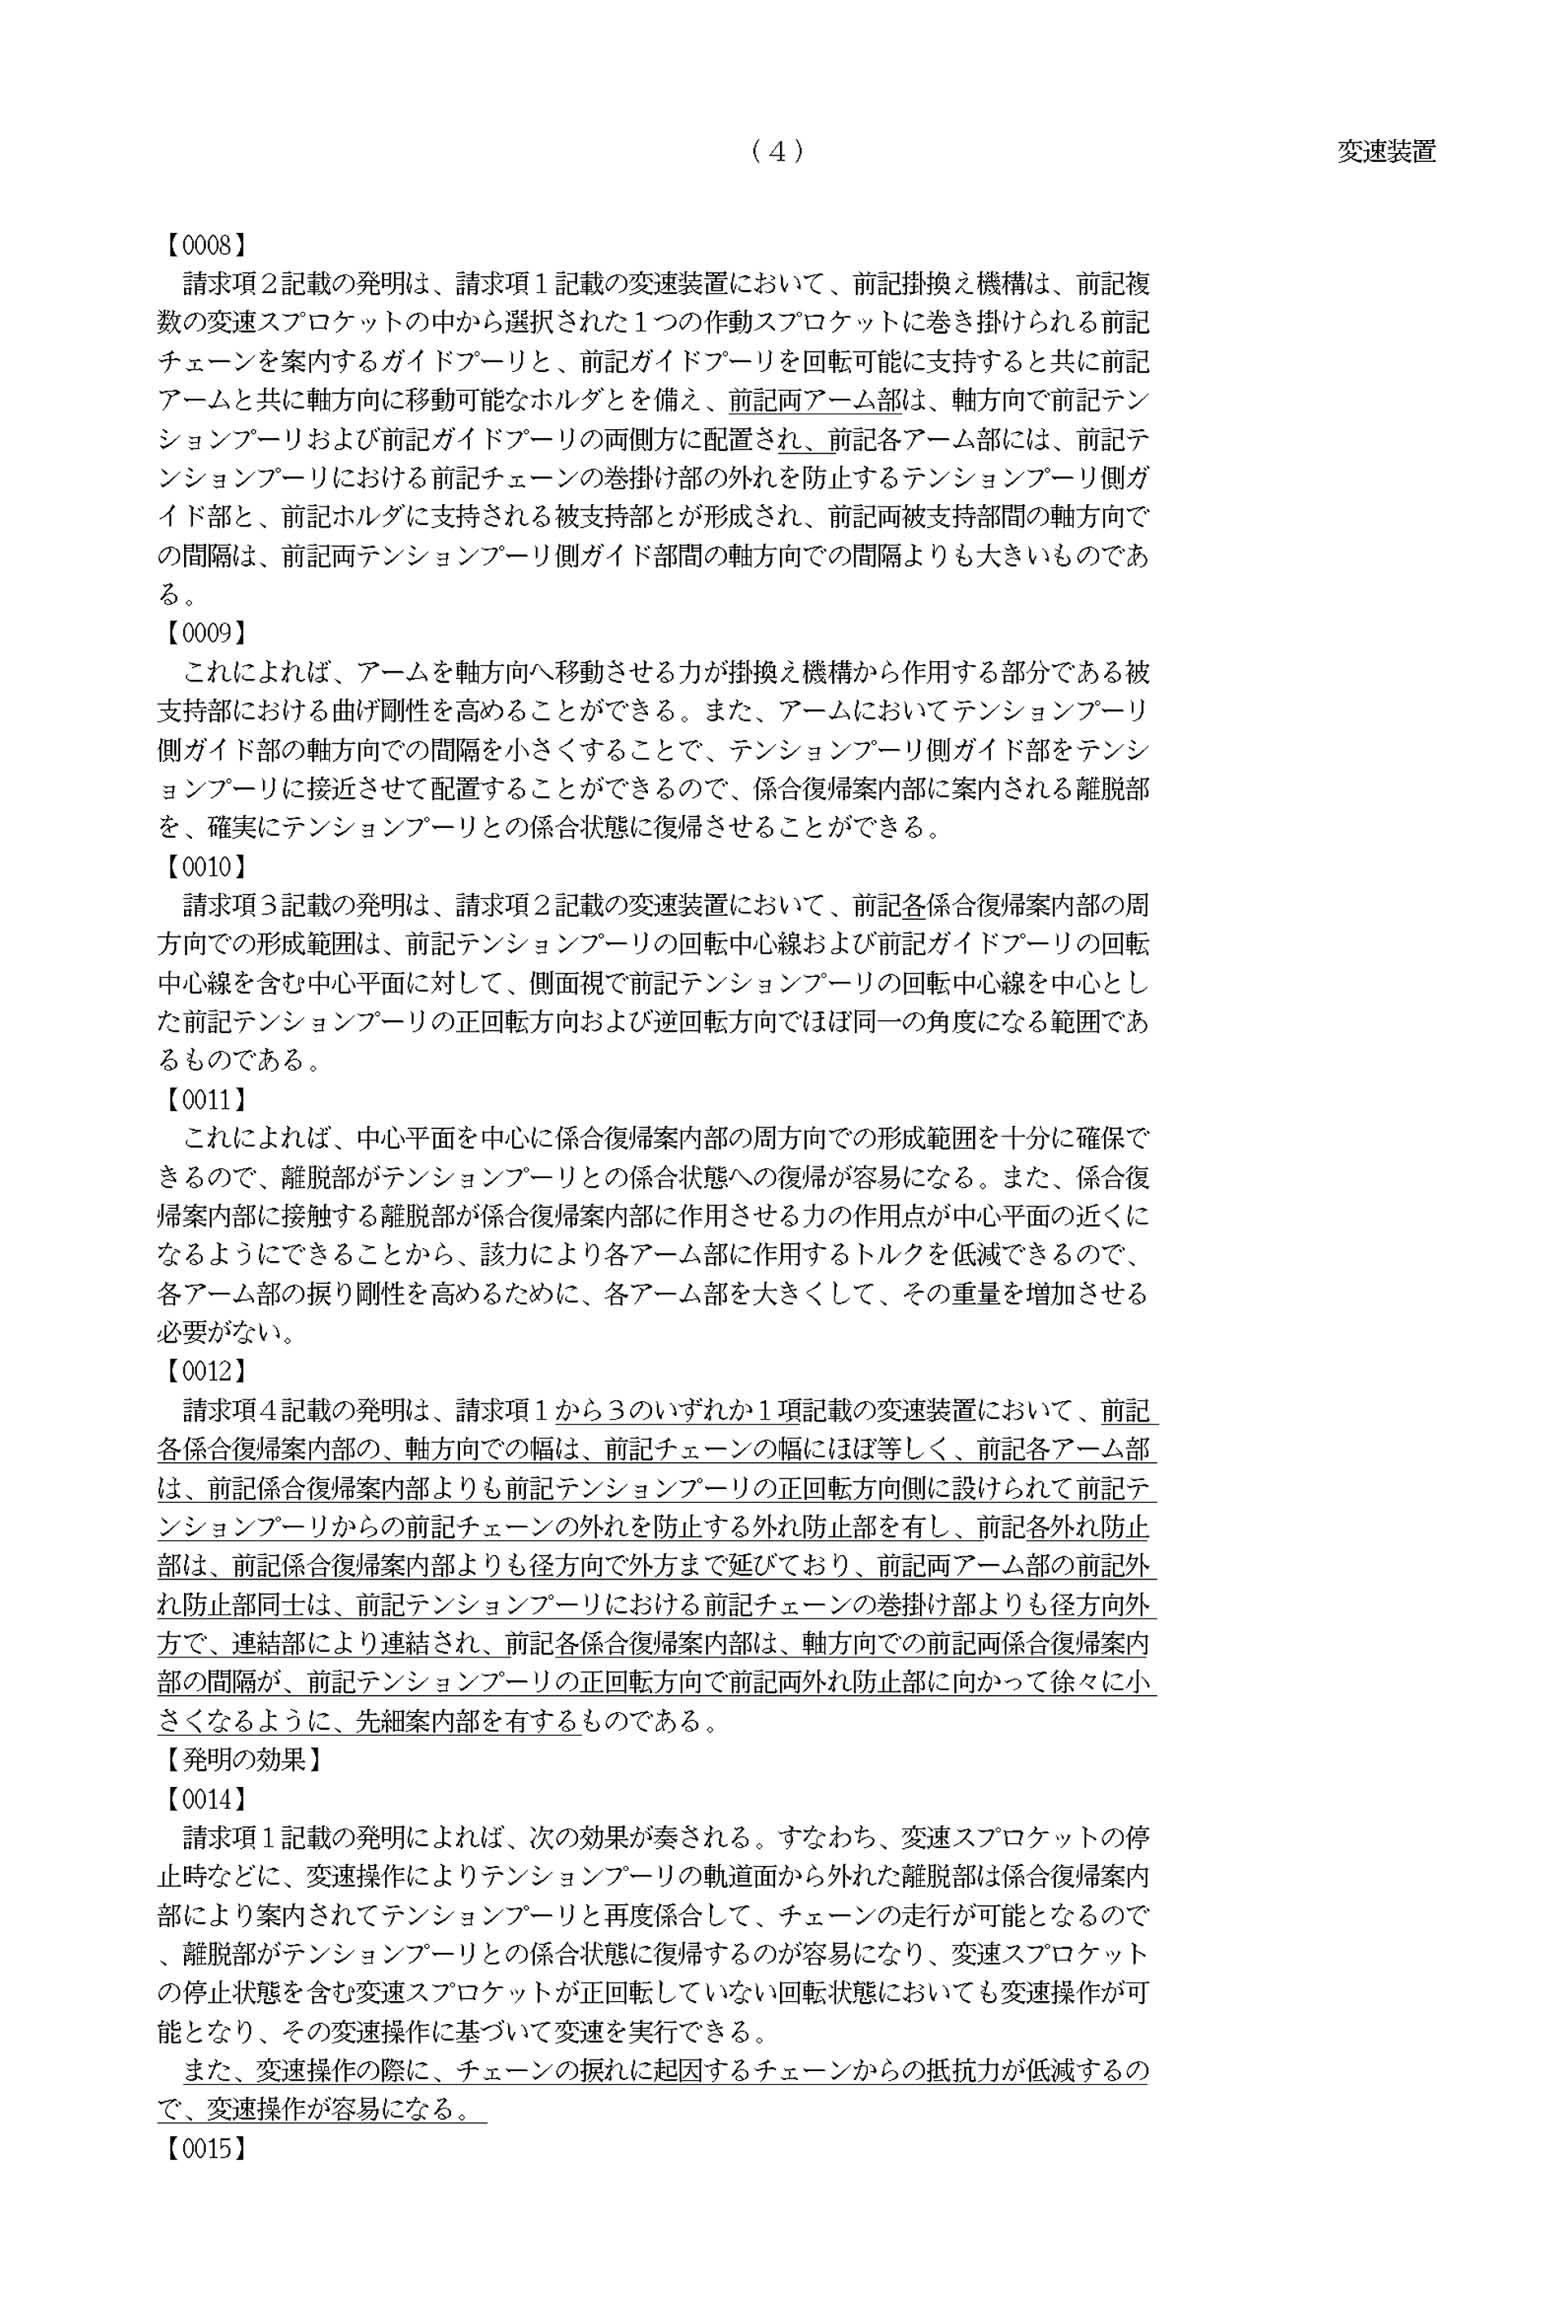 Japanese Patent 4219310 - Honda page 04 main image